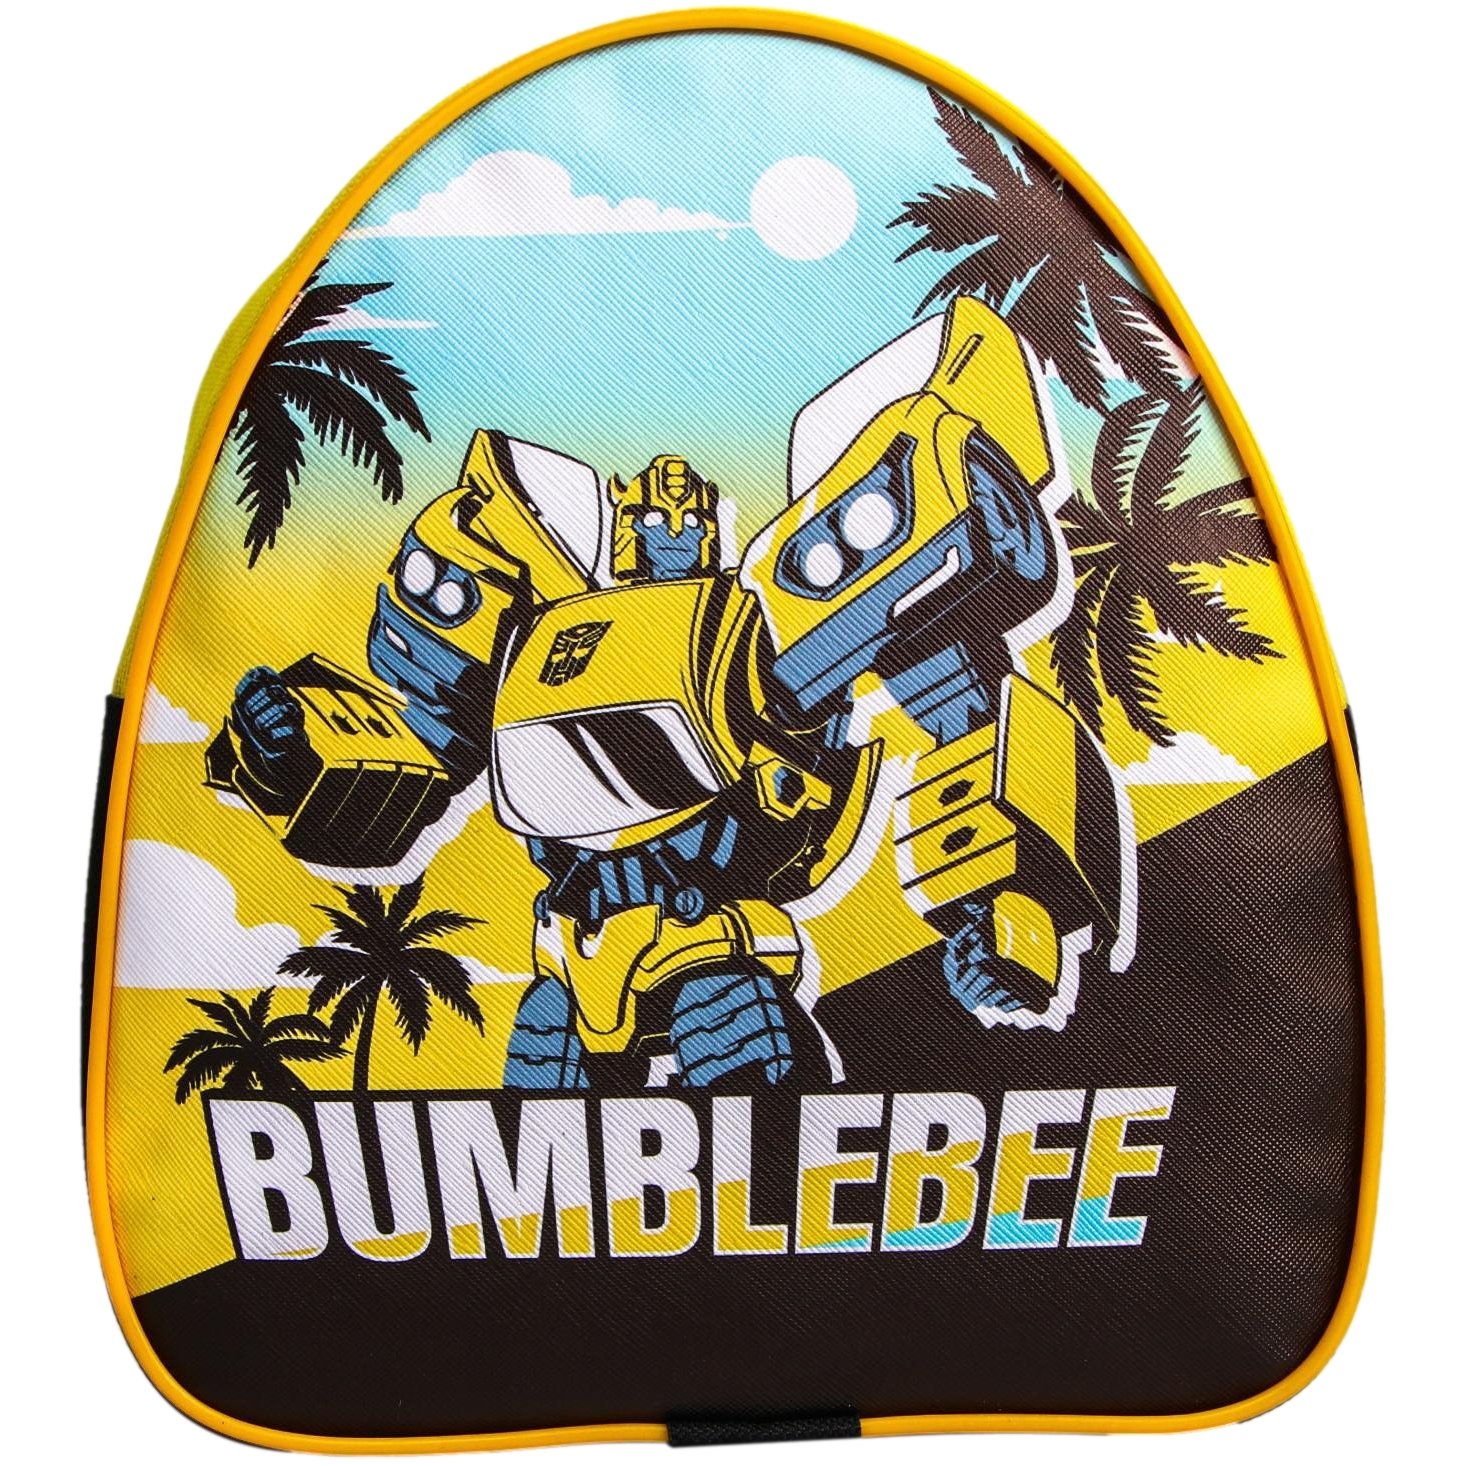 Рюкзак детский Bumblebee Transformers